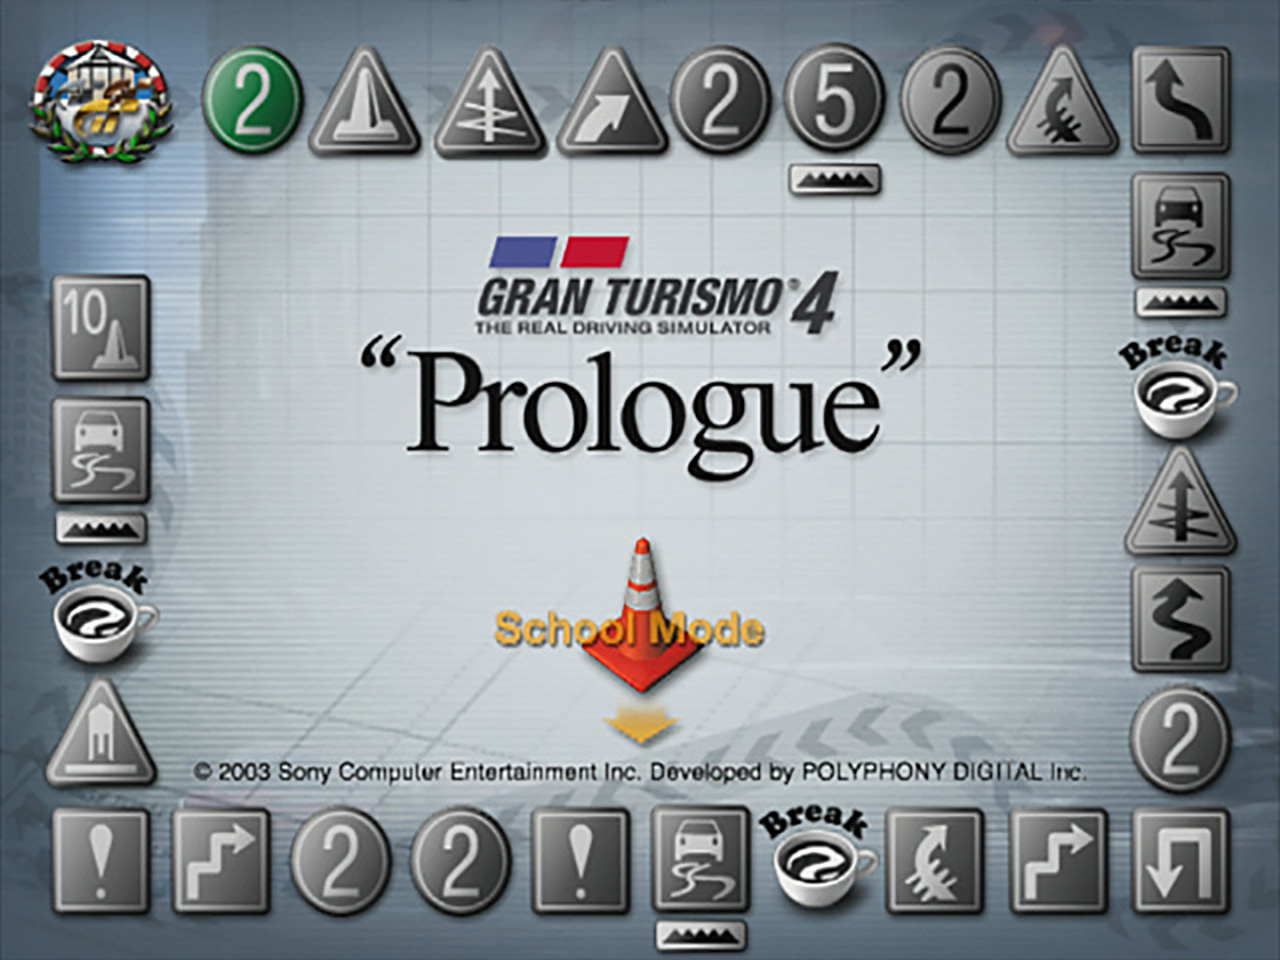 Gran Turismo 4 Prologue 